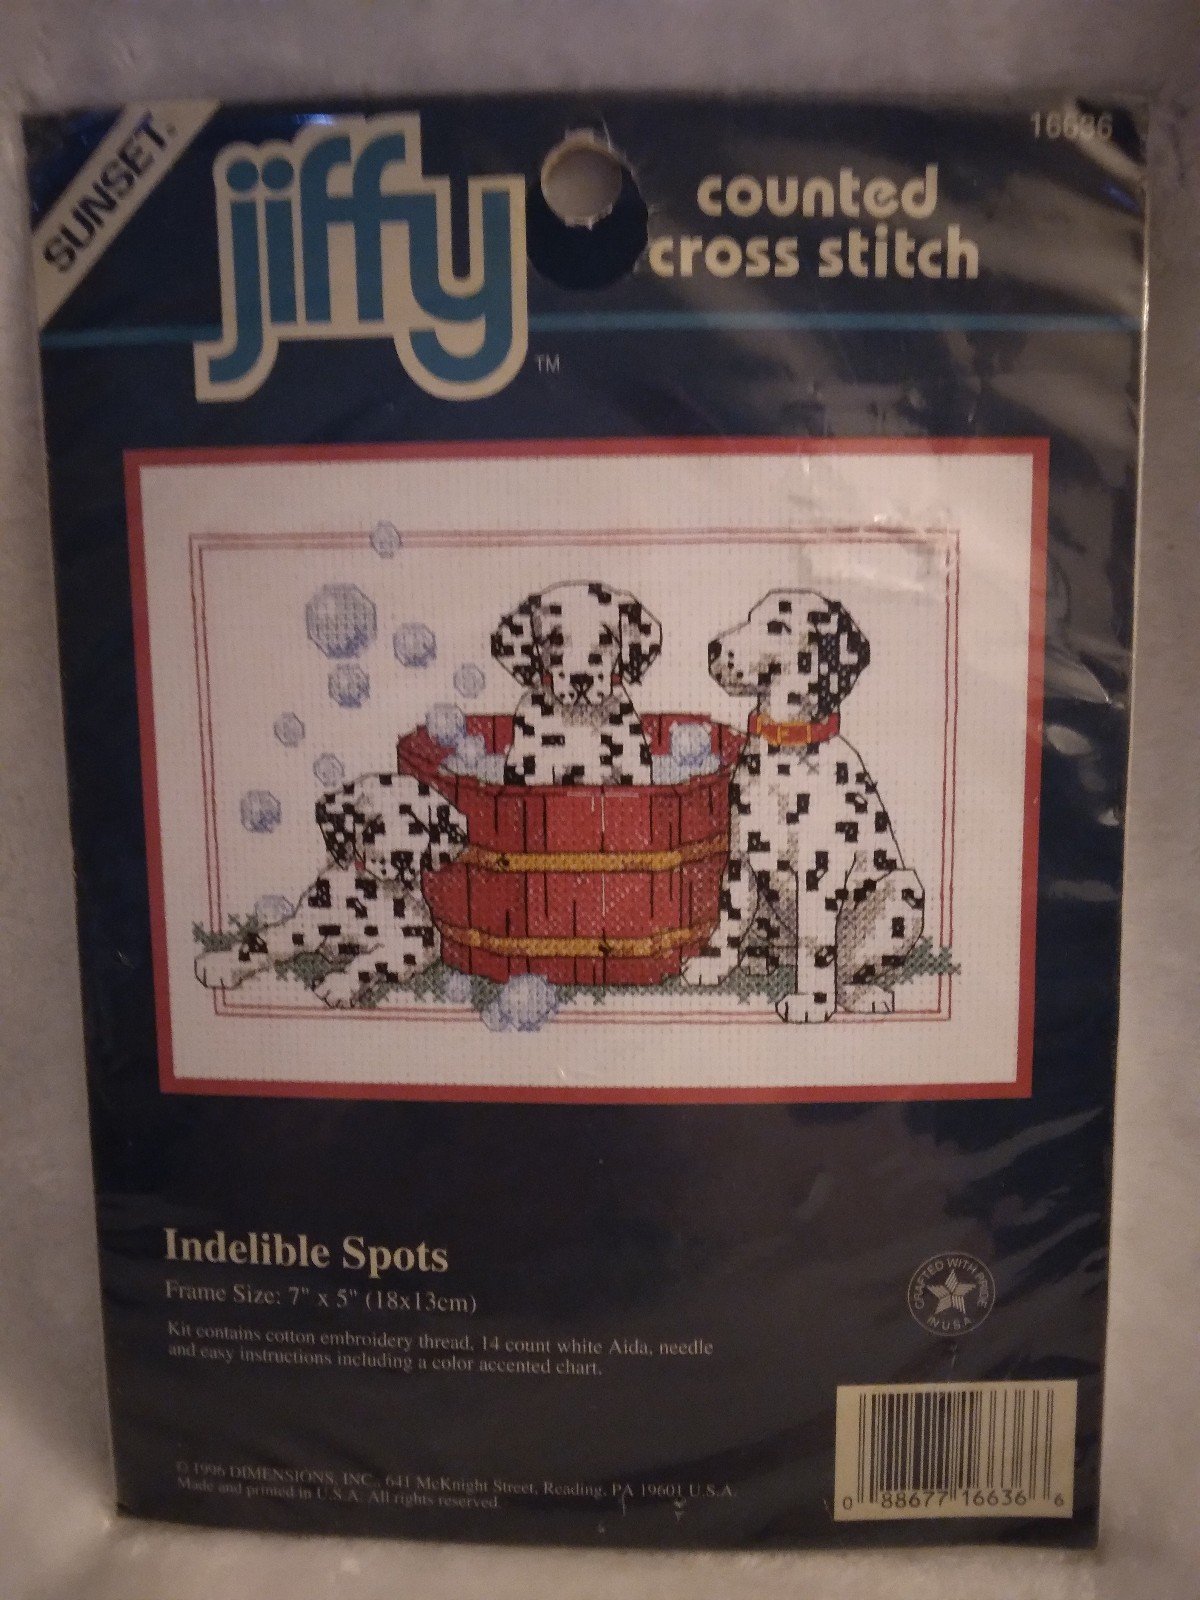 Jiffy Indelible Spots Dalmation Cross Stitch Kit K9t9c6Icg